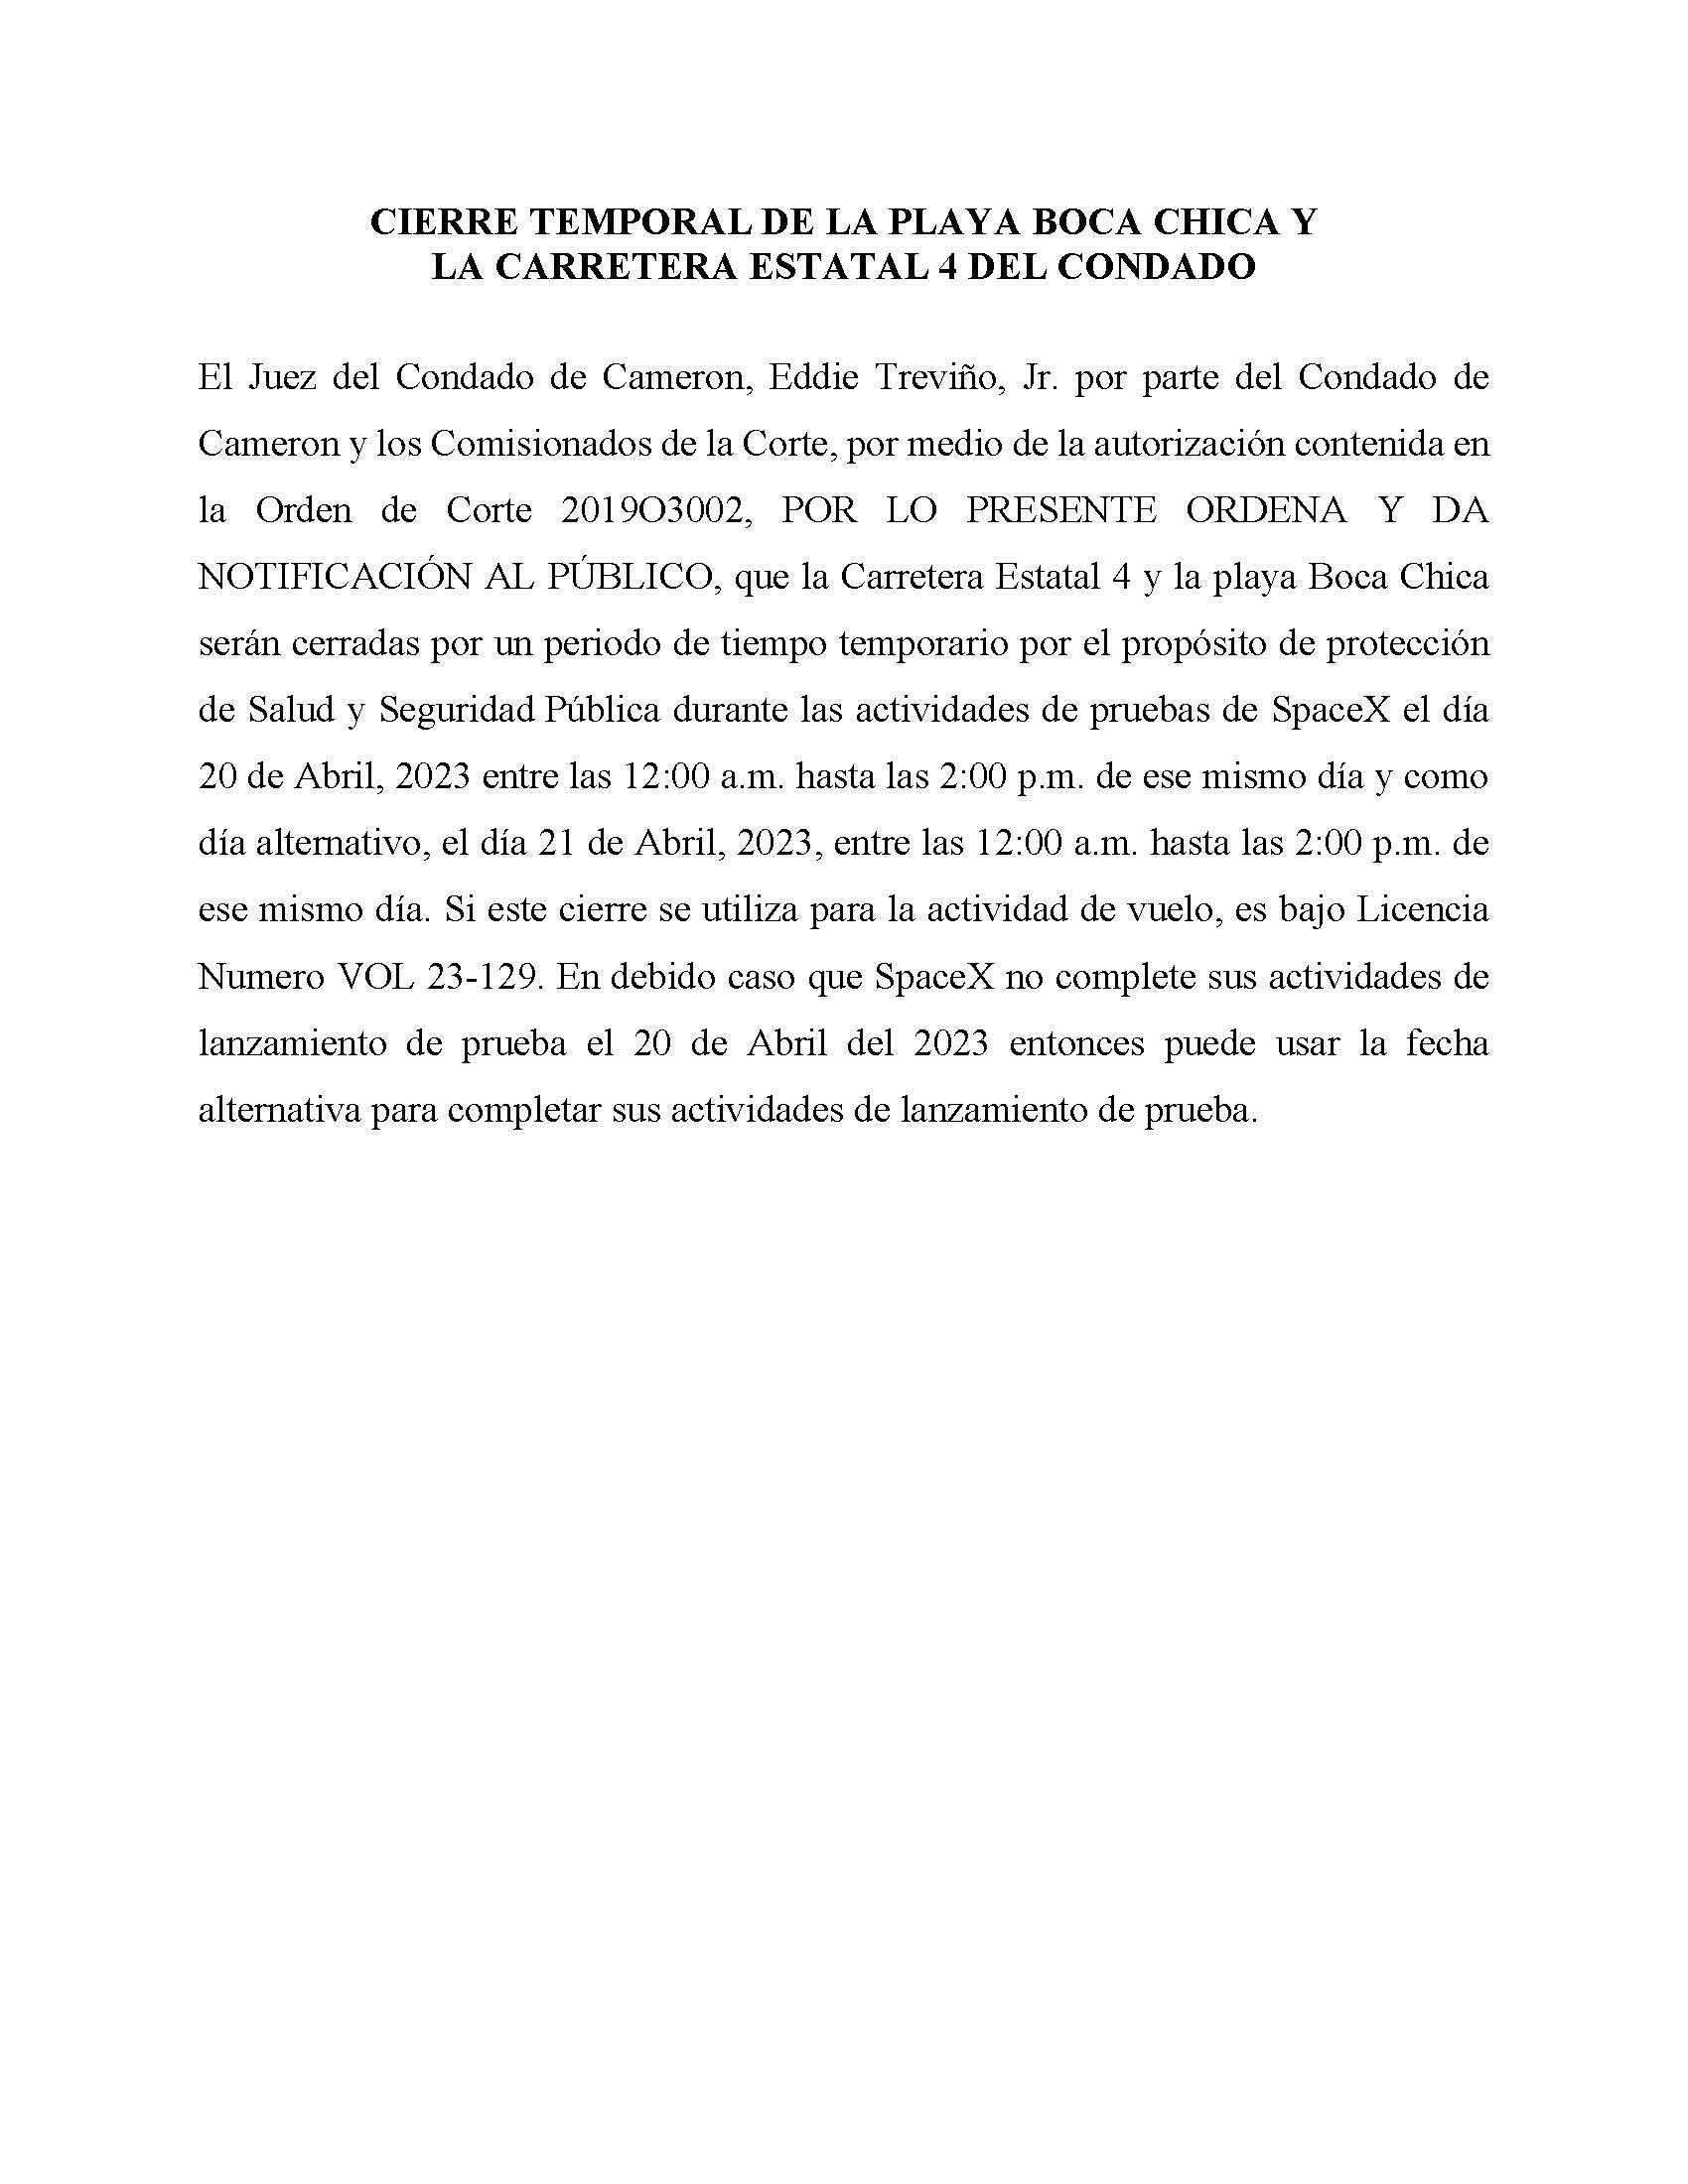 ORDER.CLOSURE OF HIGHWAY 4 Y LA PLAYA BOCA CHICA.SPANISH.04.20.2023